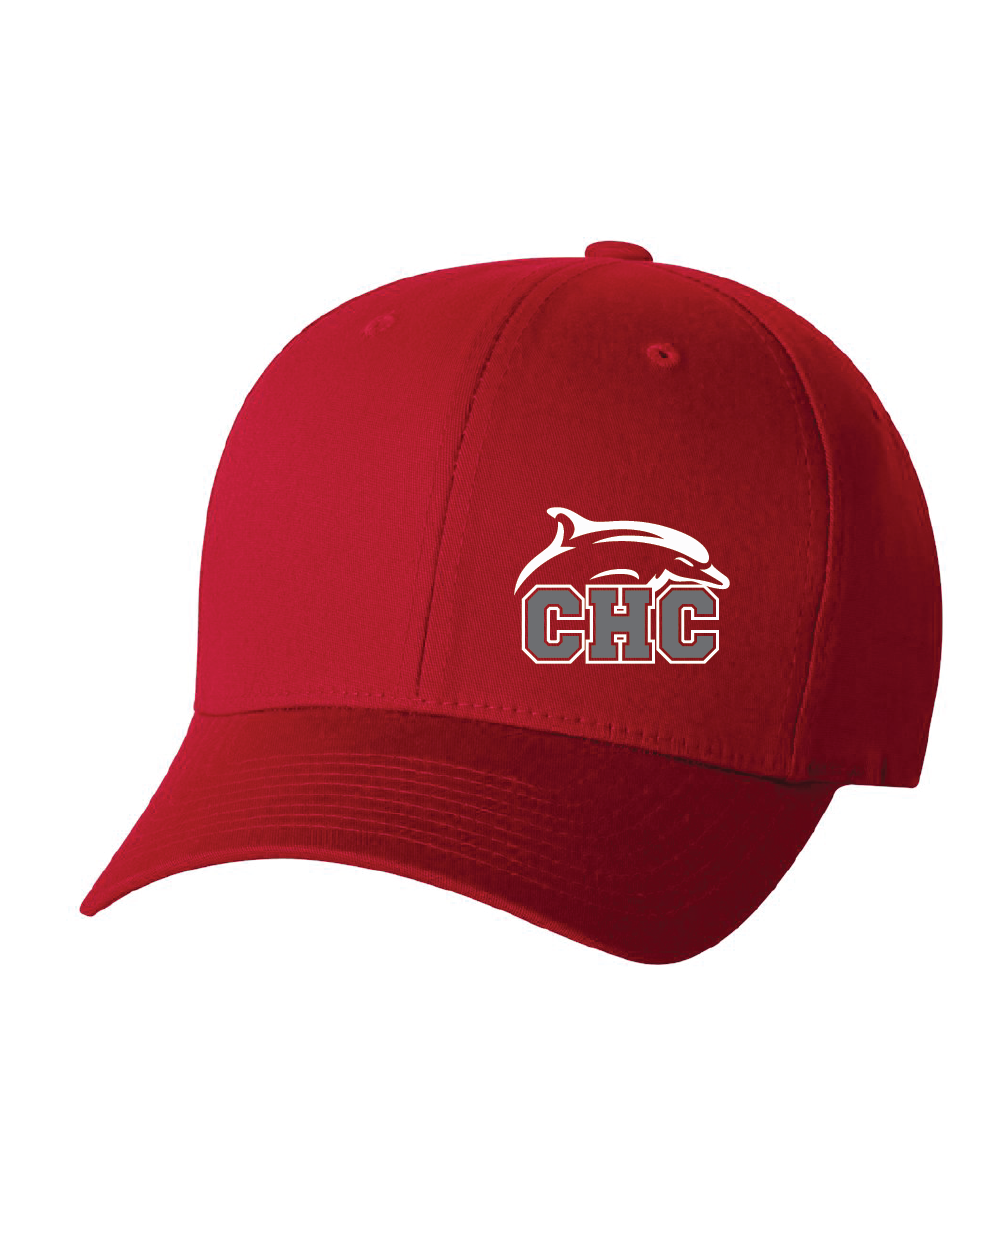 V-Flex Twill Cap / Red / Cape Henry Collegiate